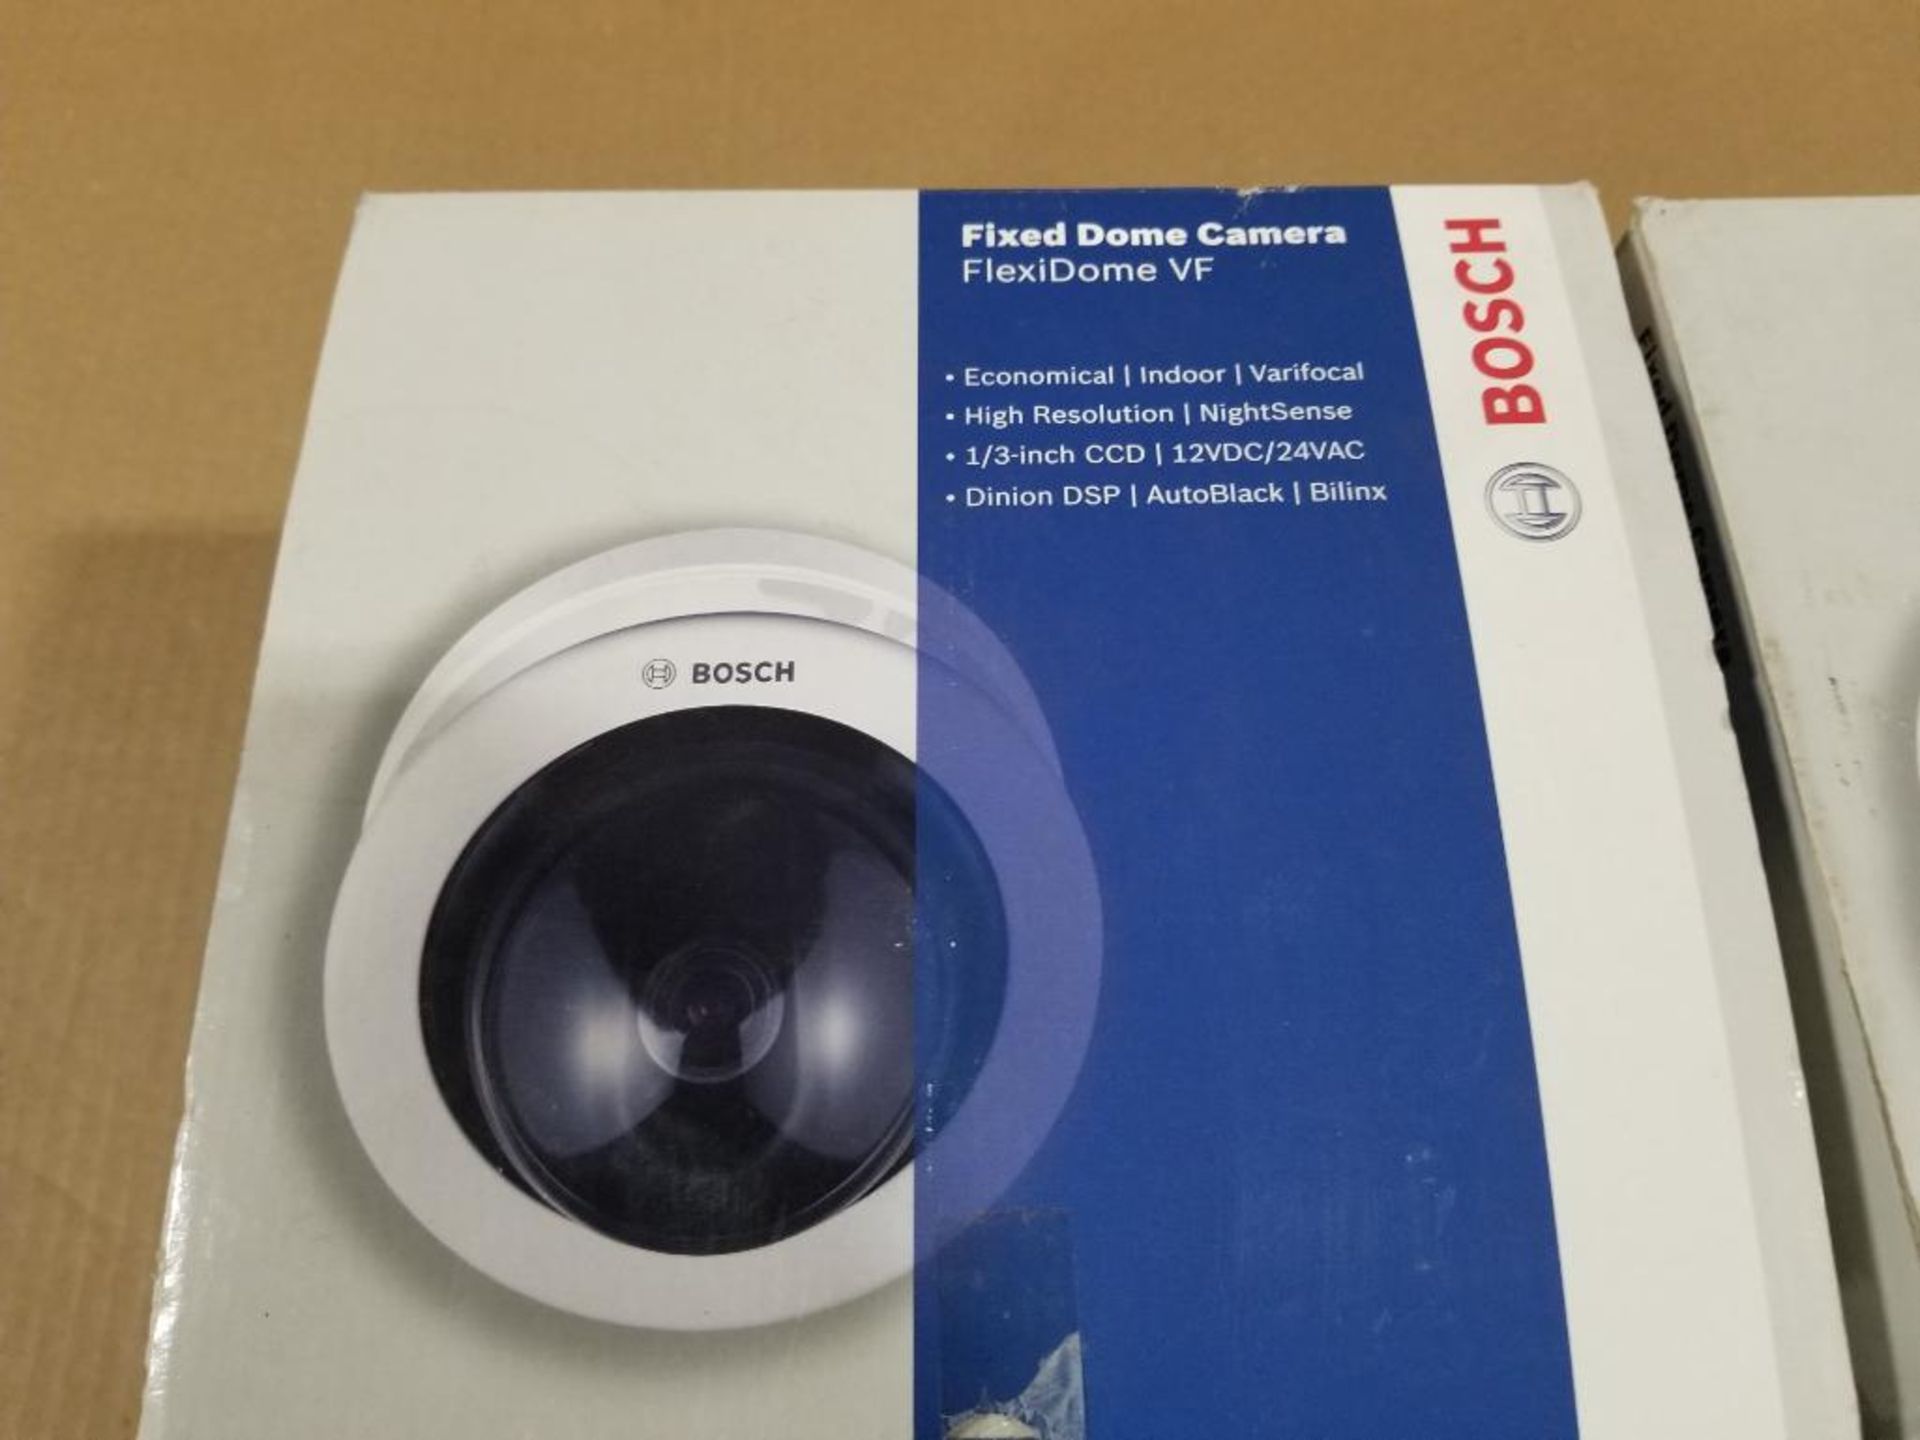 Qty 4 - Bosch fixed dome camera. Model FlexiDome VF. - Image 3 of 5